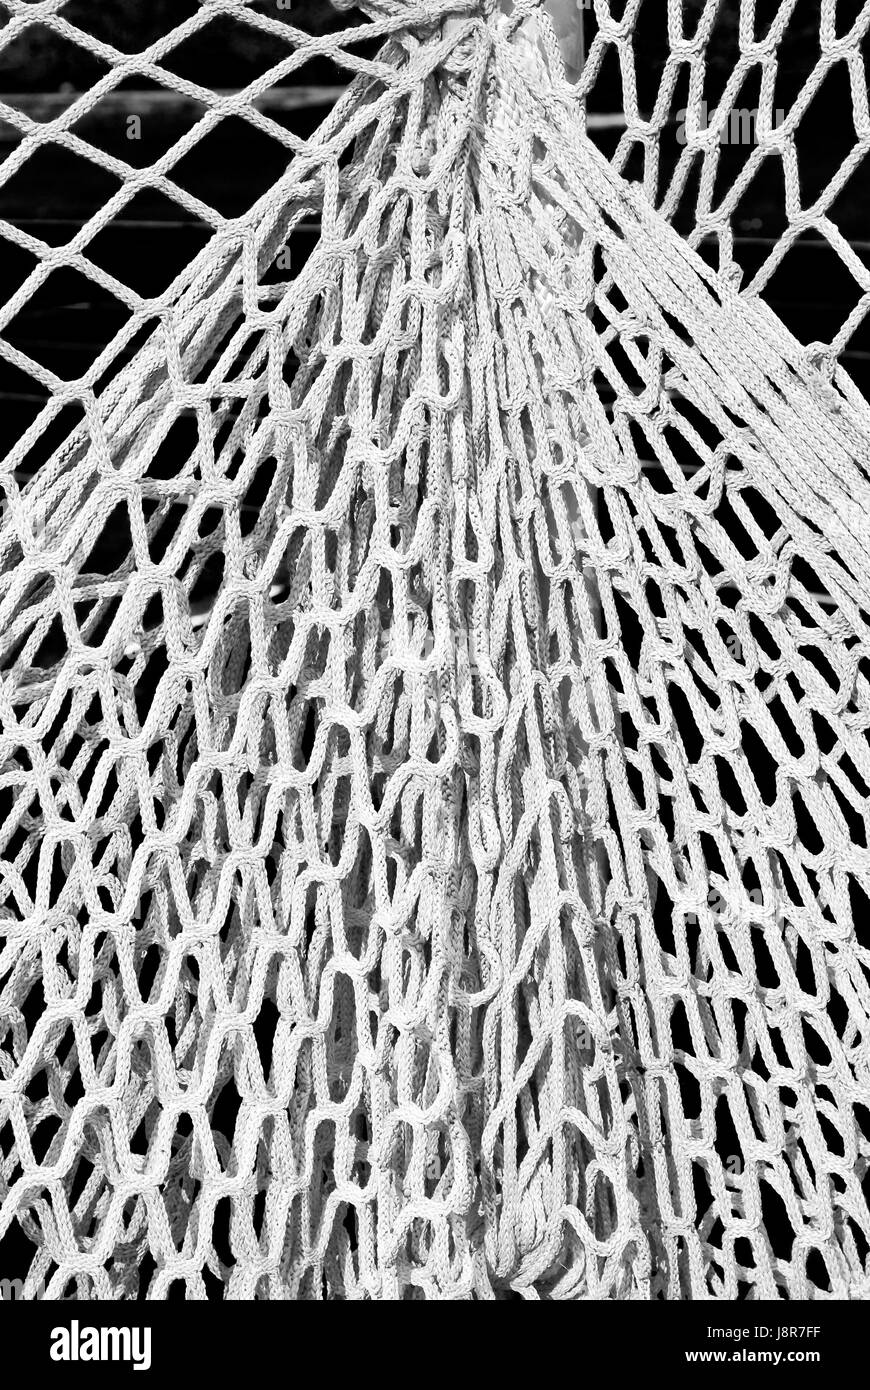 https://c8.alamy.com/comp/J8R7FF/net-decoration-equipment-pattern-netting-rope-fishing-net-design-J8R7FF.jpg